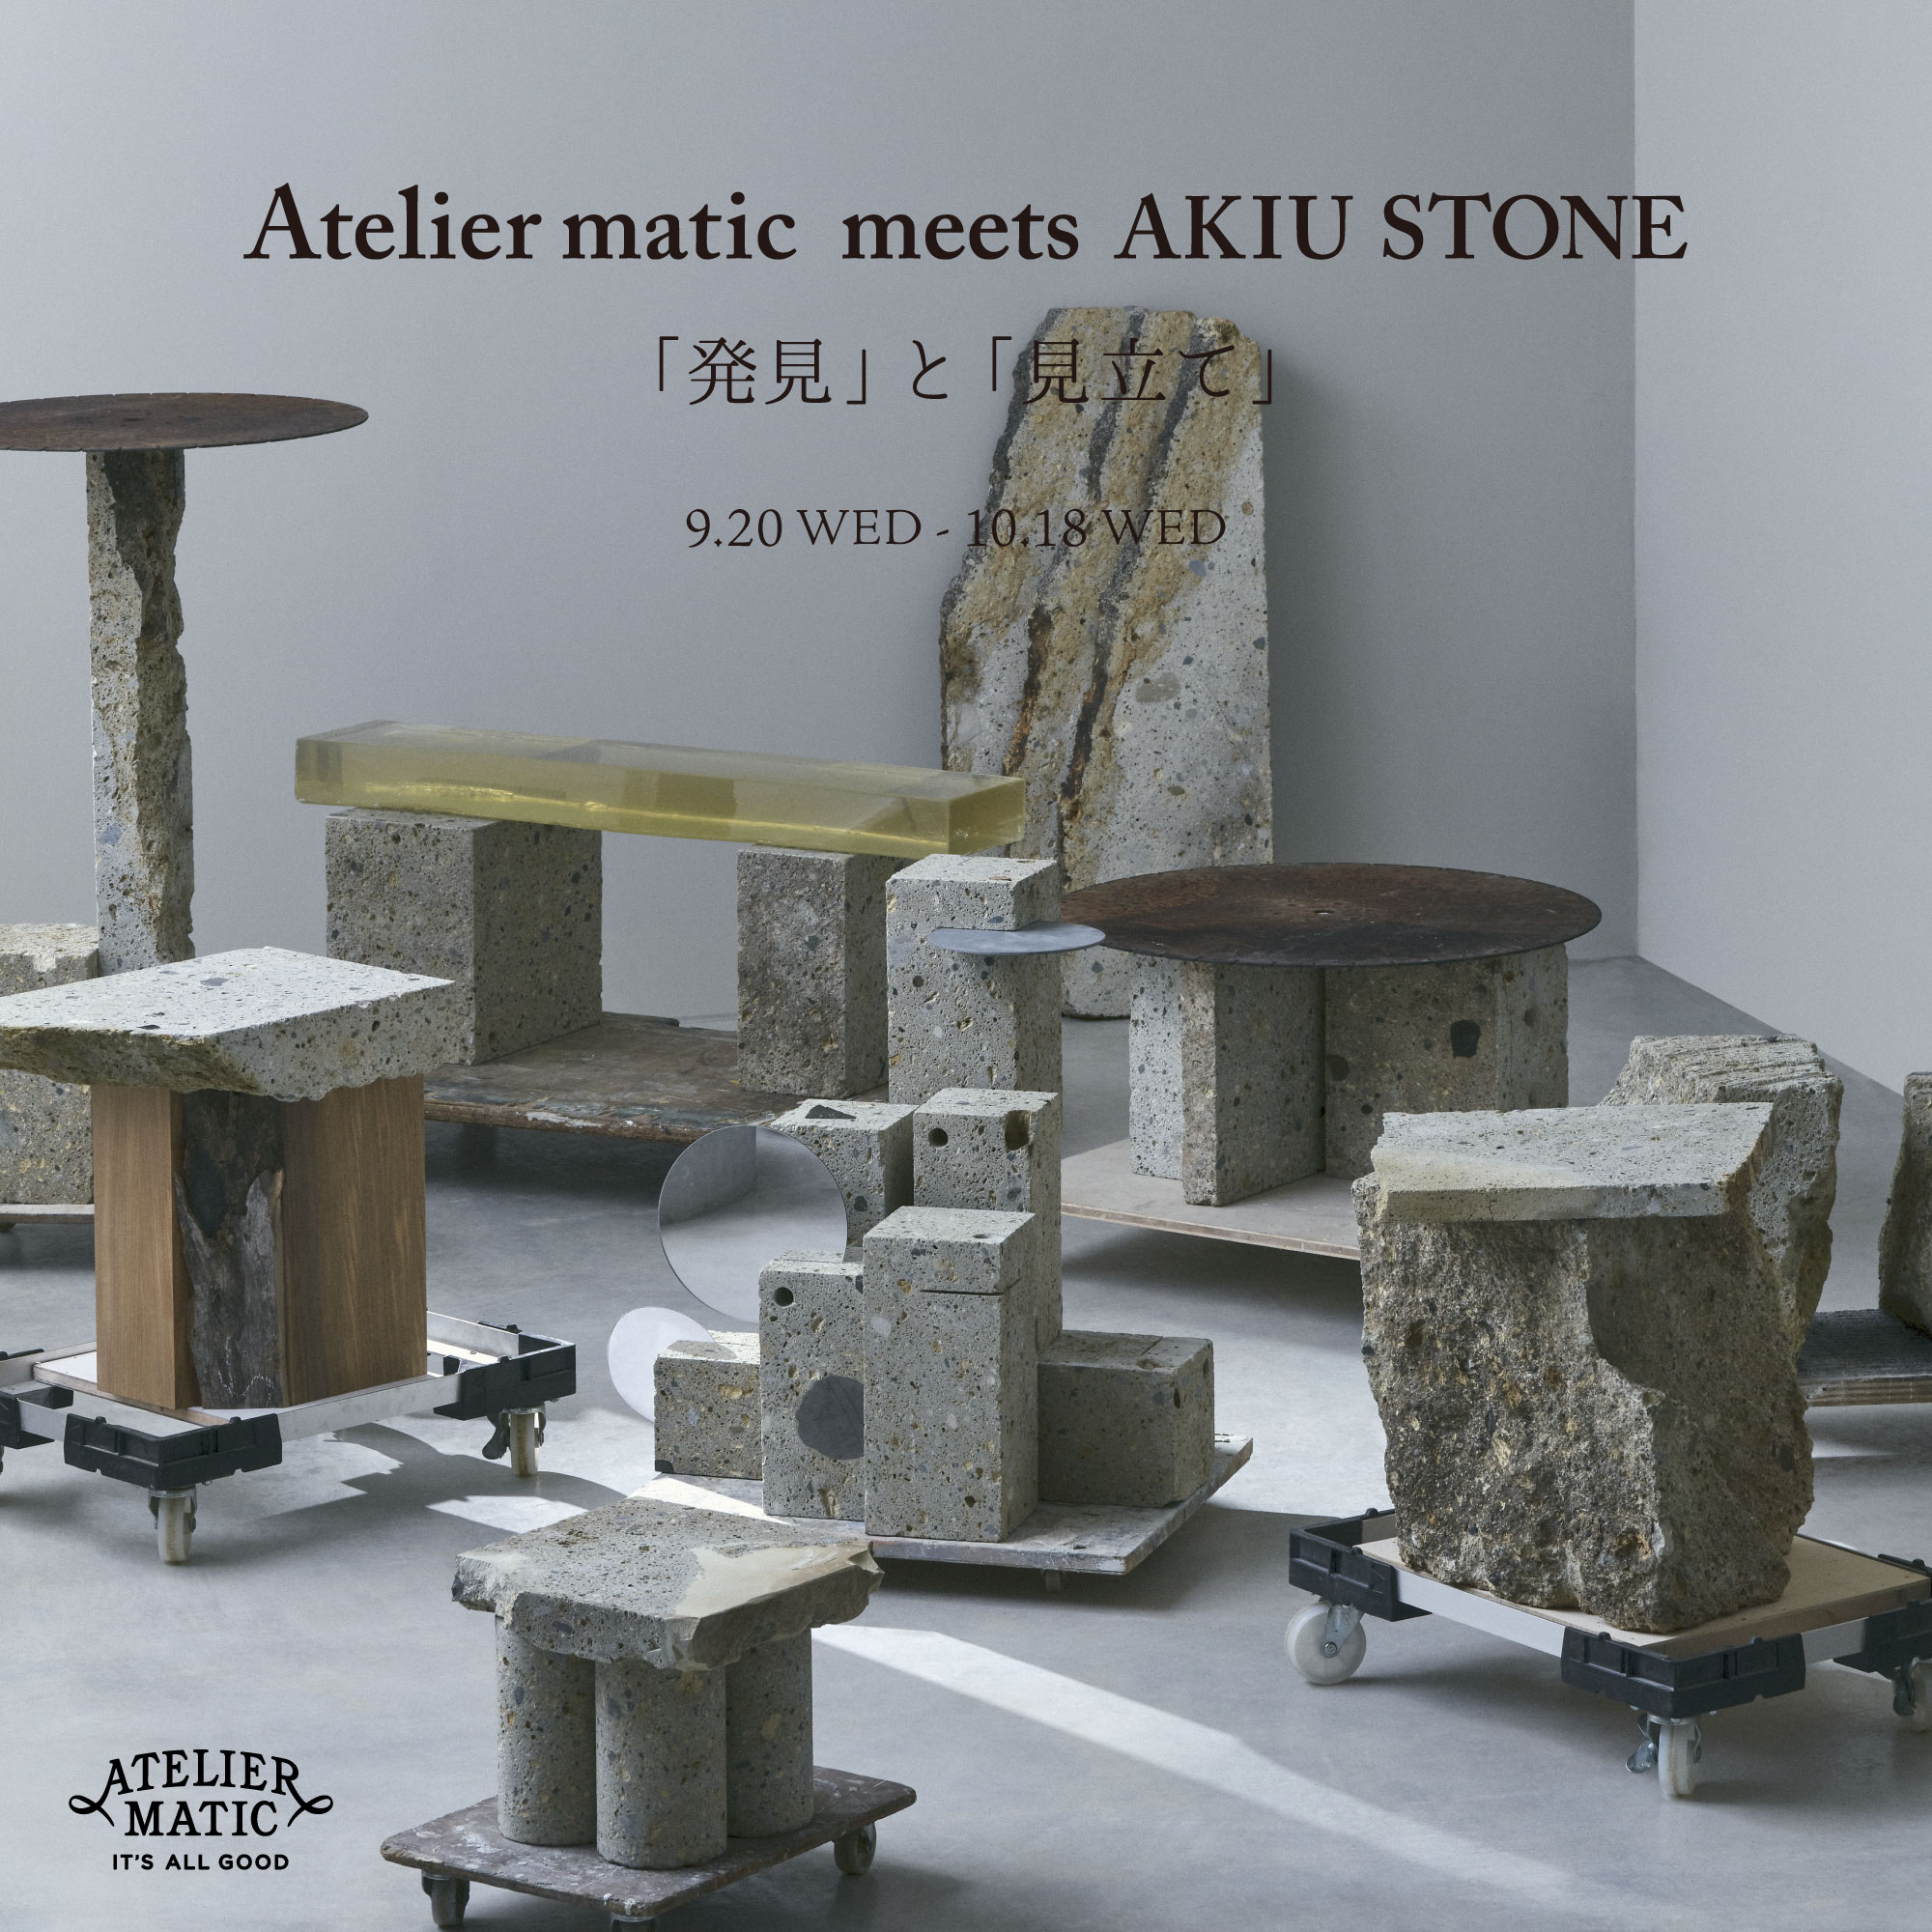 Atelier matic meets AKIU STONE 「発見」と「見立て」